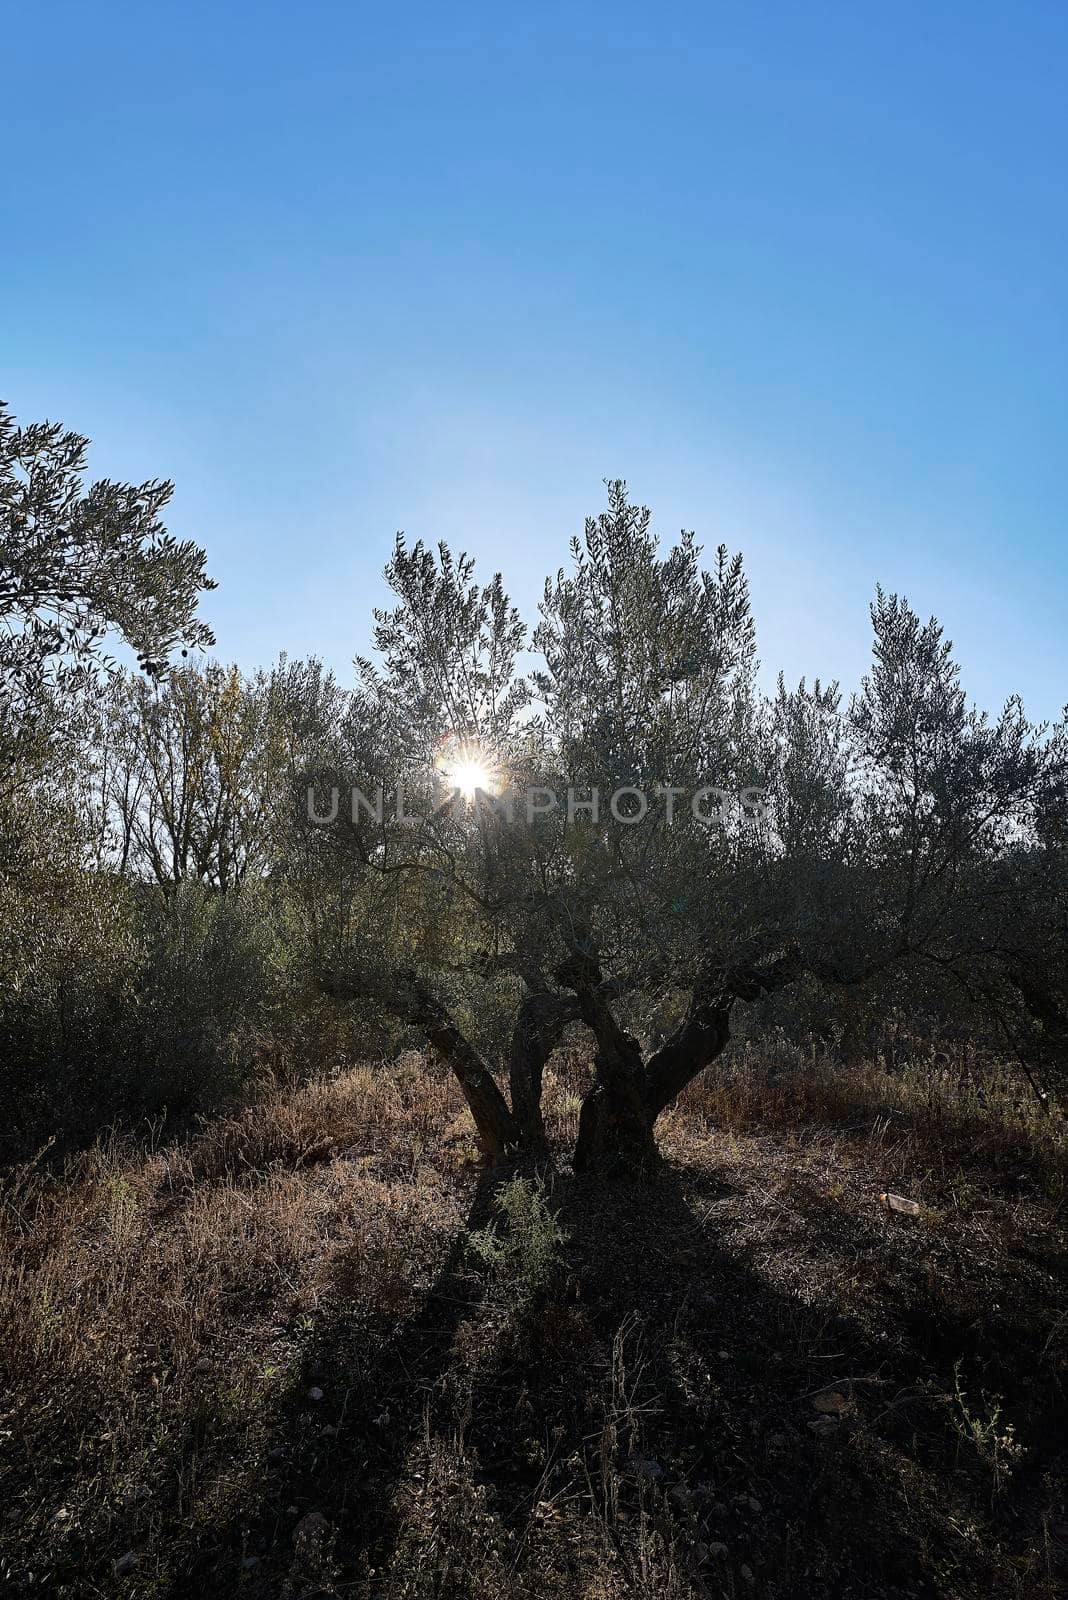 Sunbeams appearing among centenary olive trees. sun star by raul_ruiz